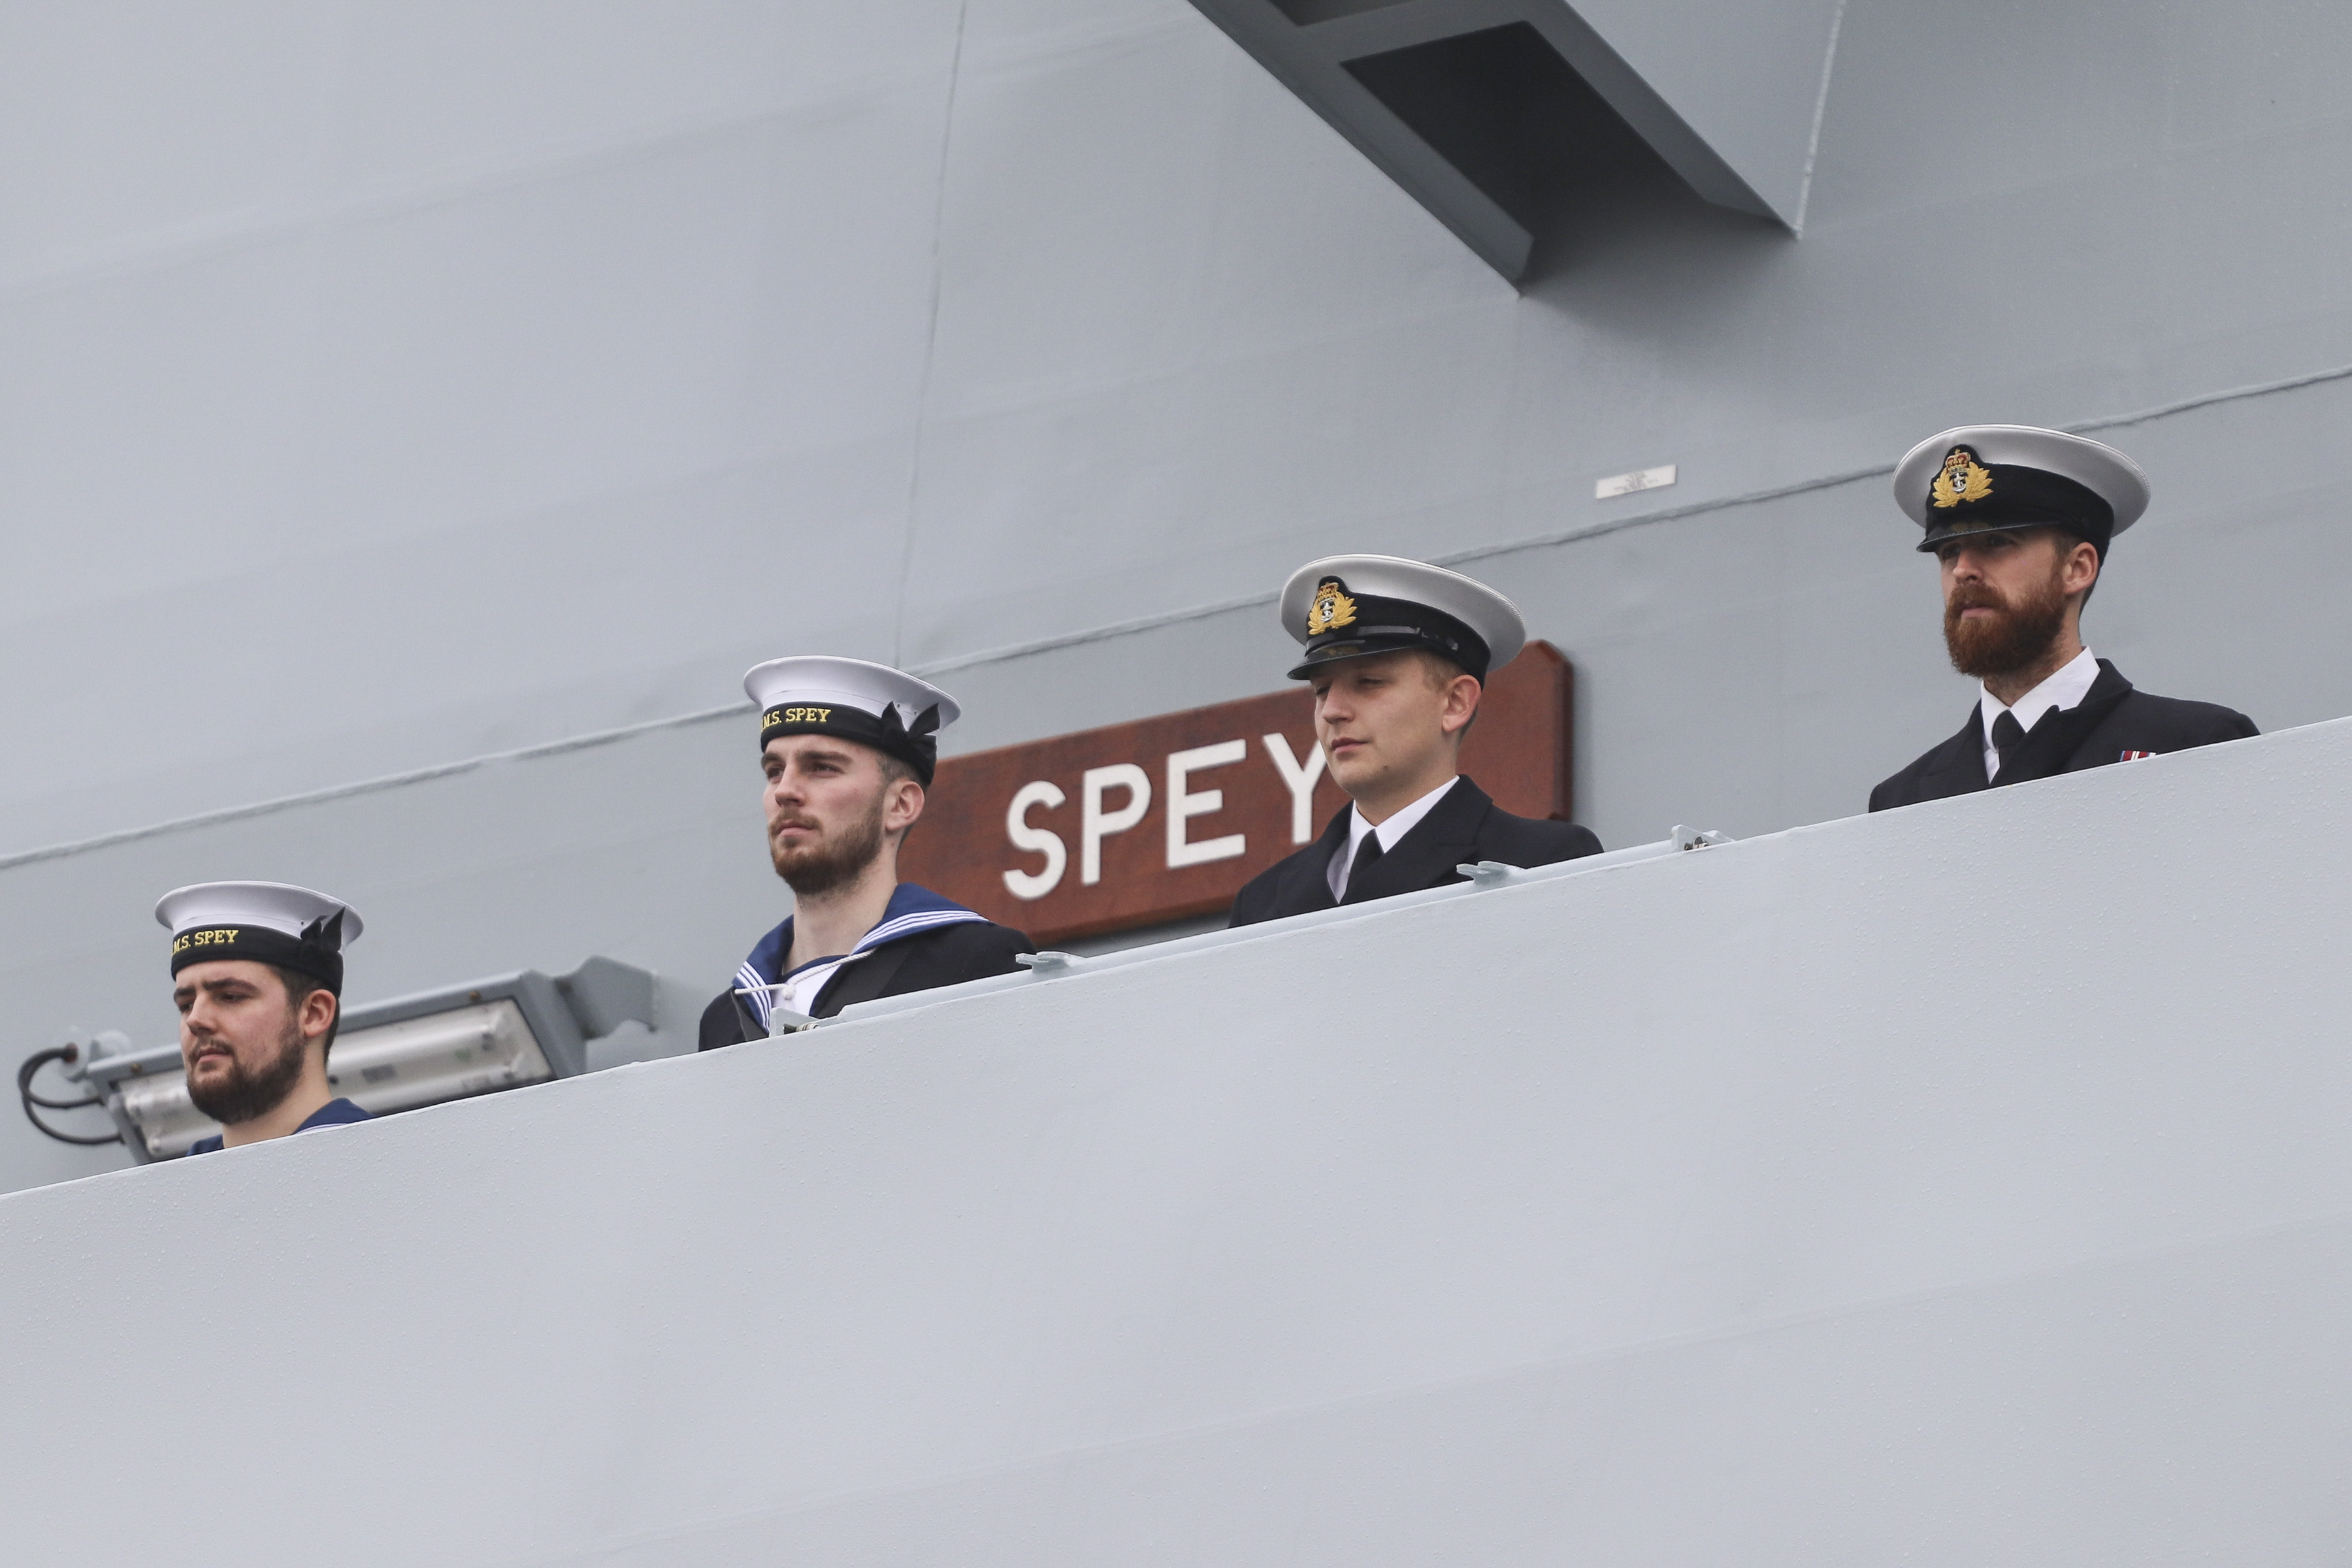 Crew on HMS Spey in Portsmouth dock